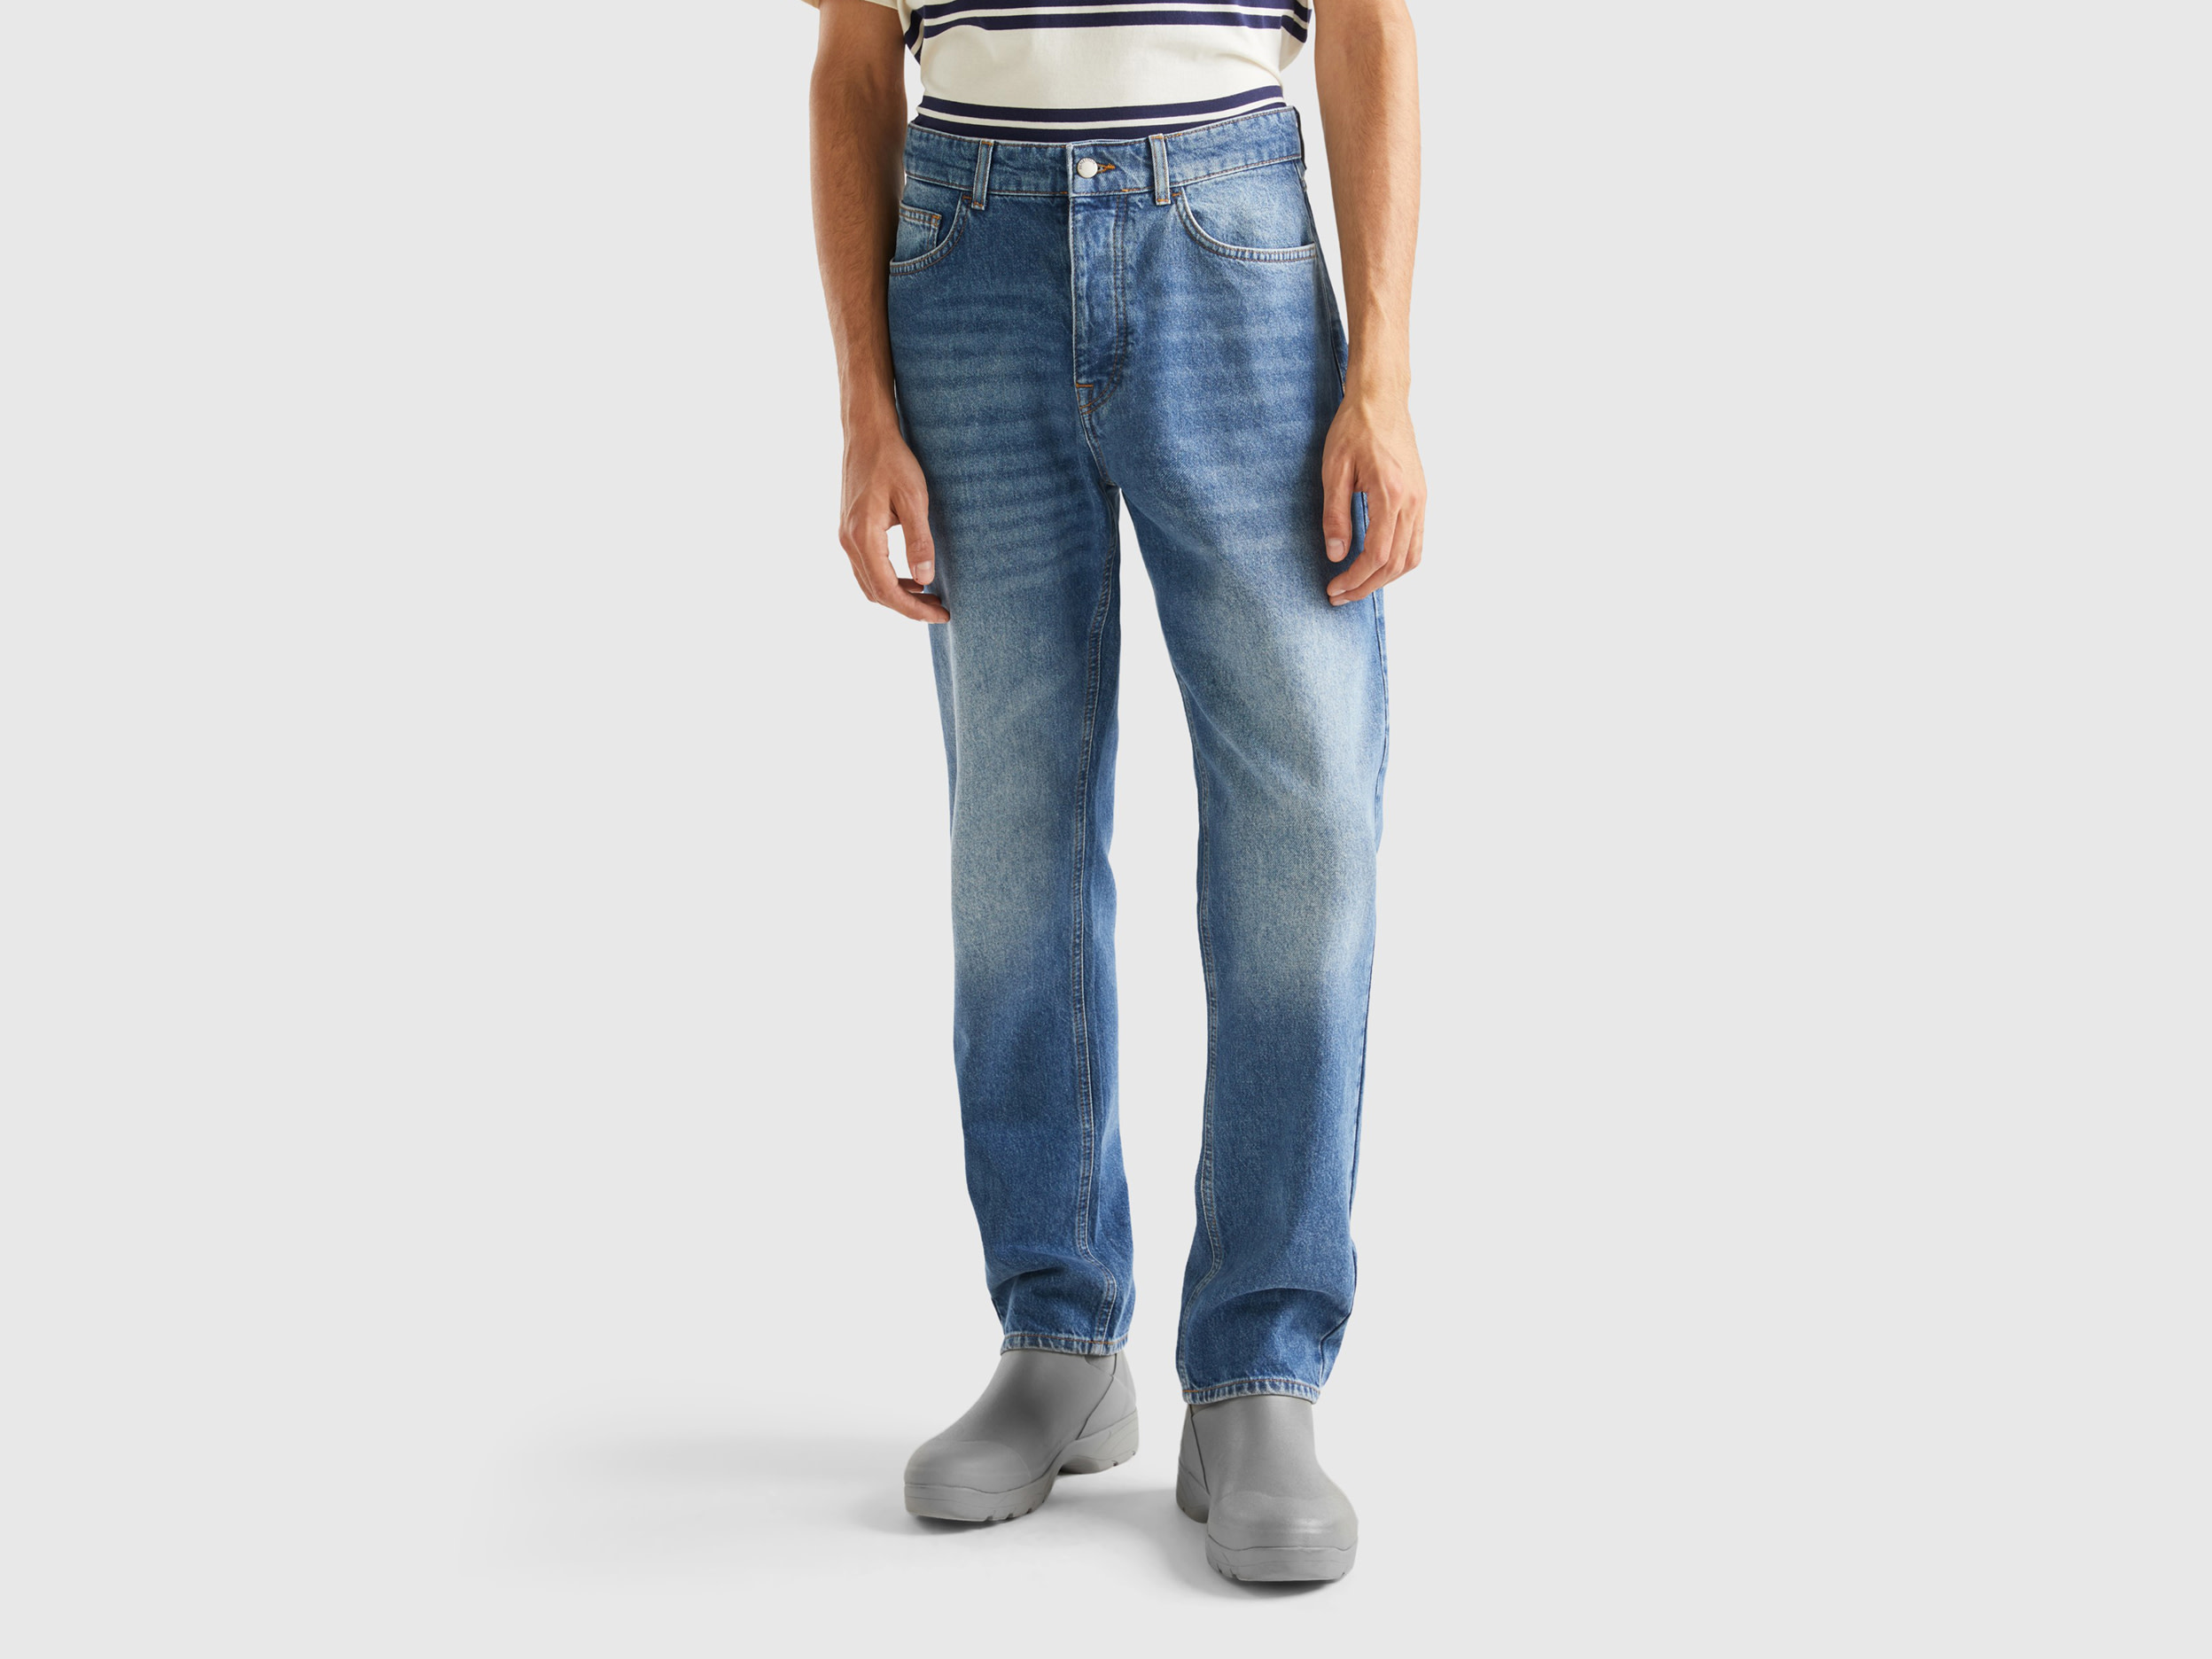 Benetton, Five-pocket Worn Look Jeans, size 34, Dark Blue, Men